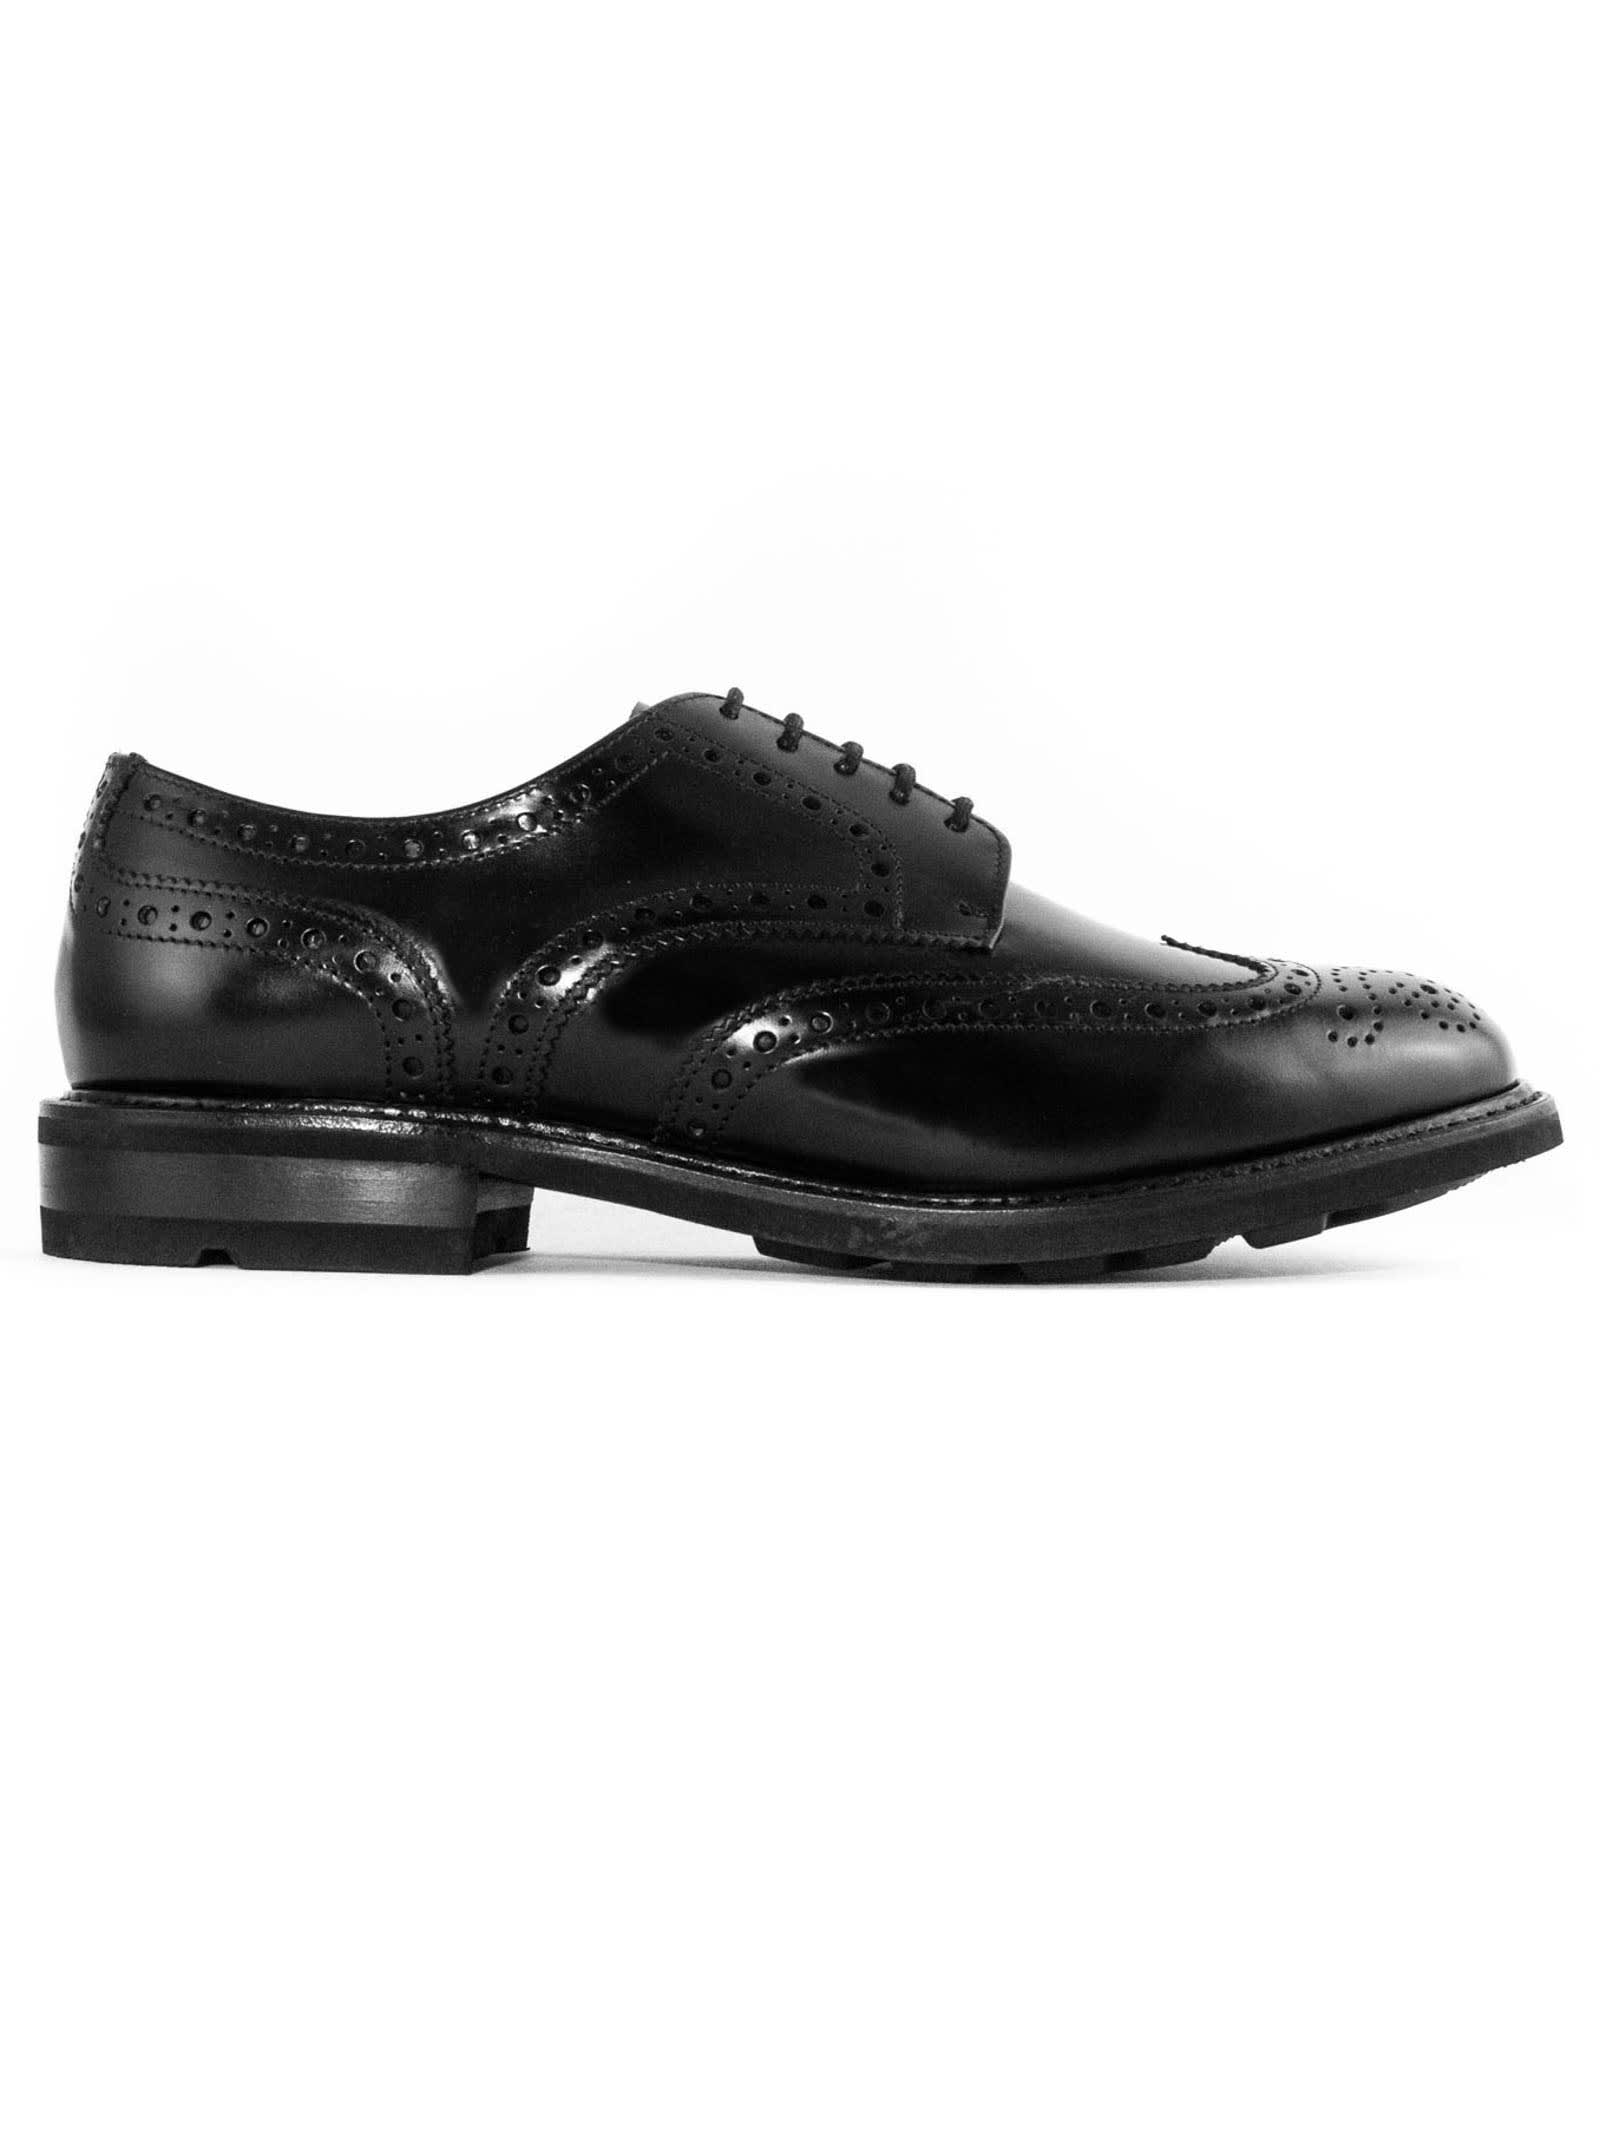 Berwick 1707 Black Shiny Leather Derby Shoes